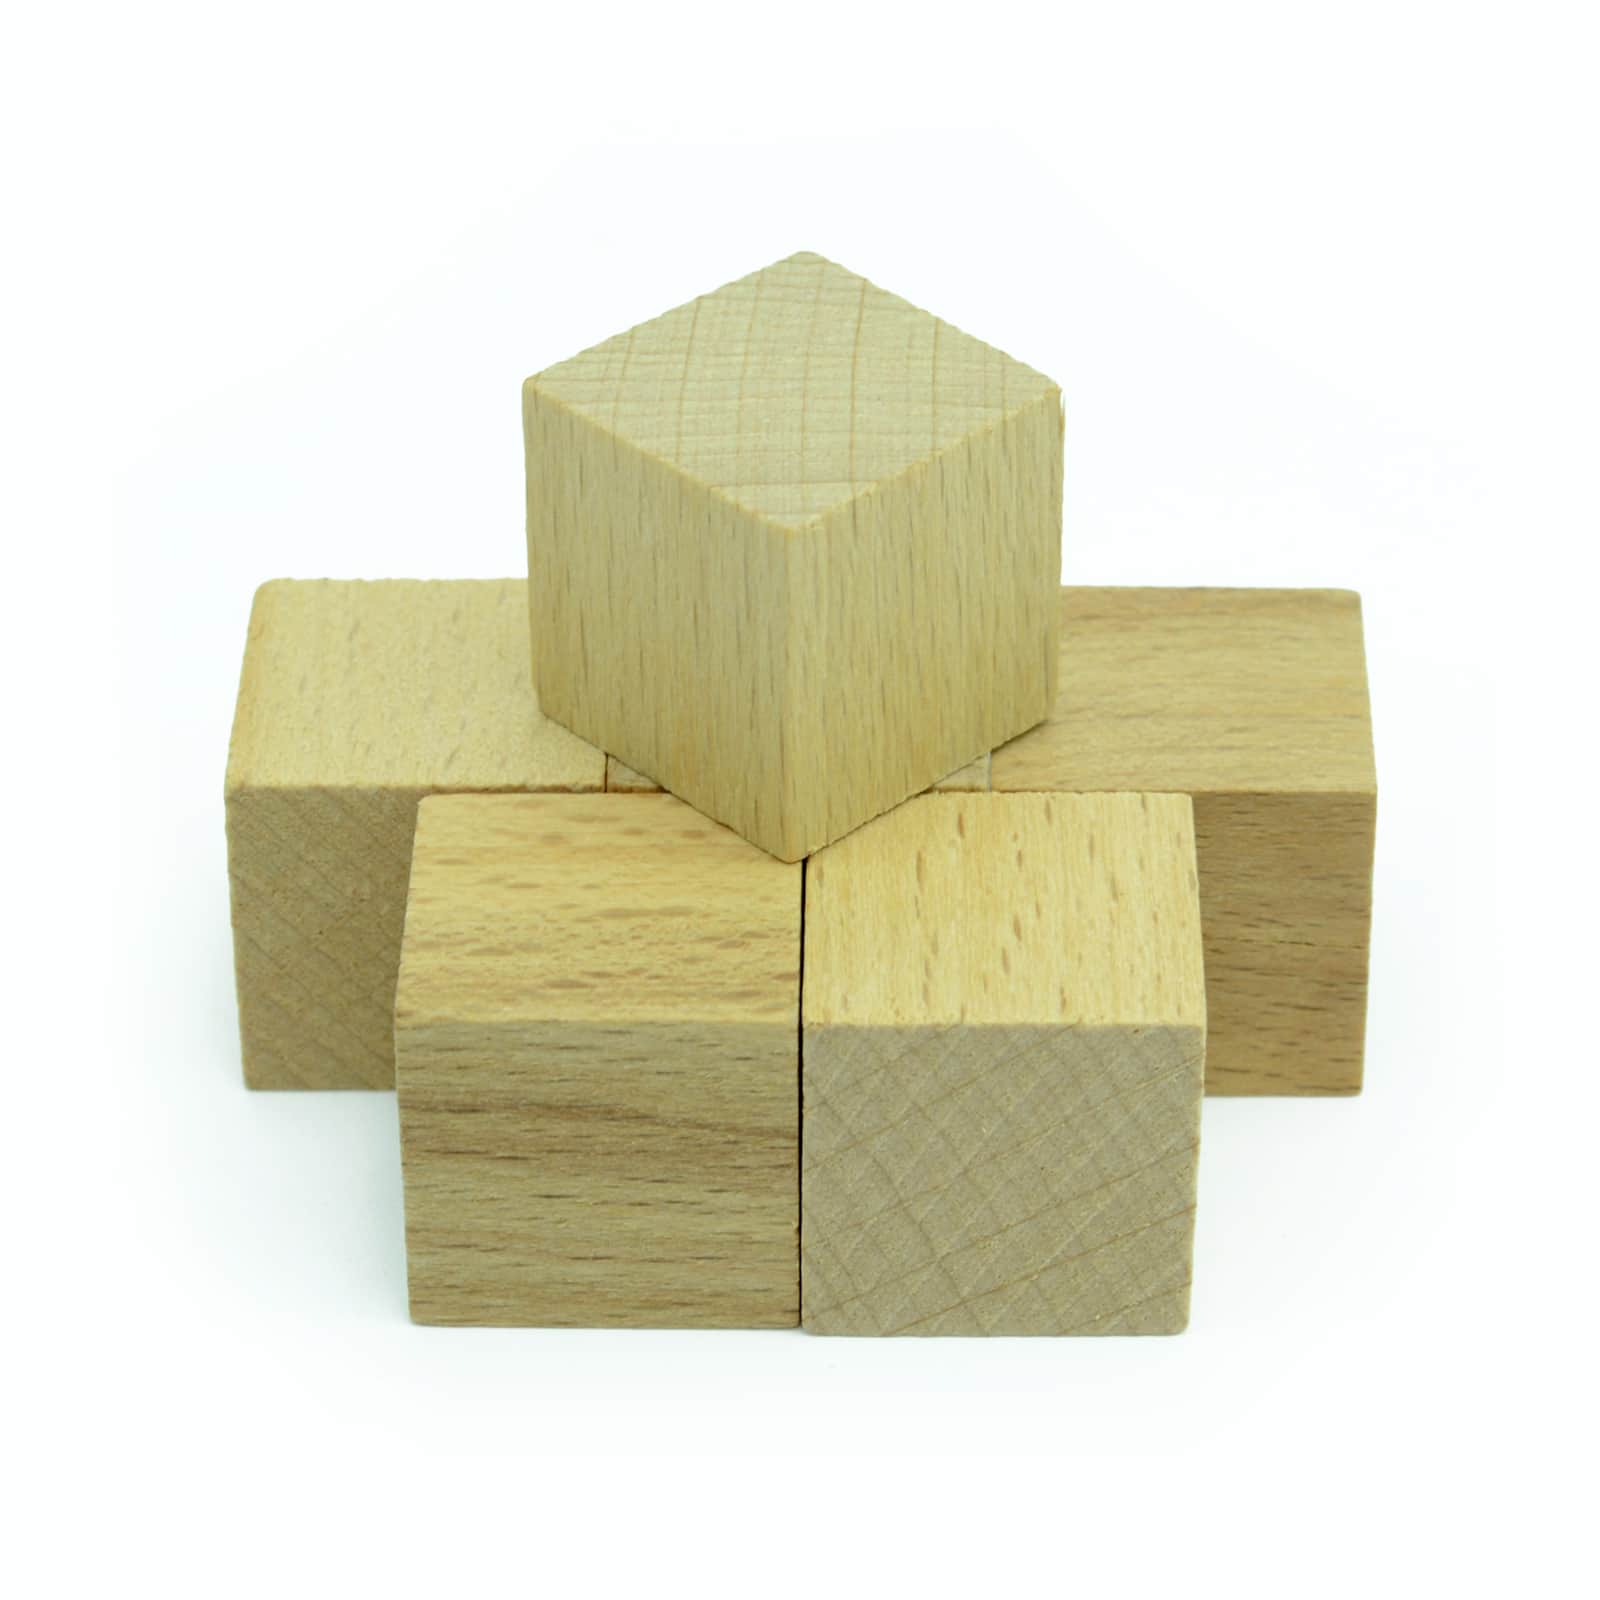 2 inch wooden blocks michaels